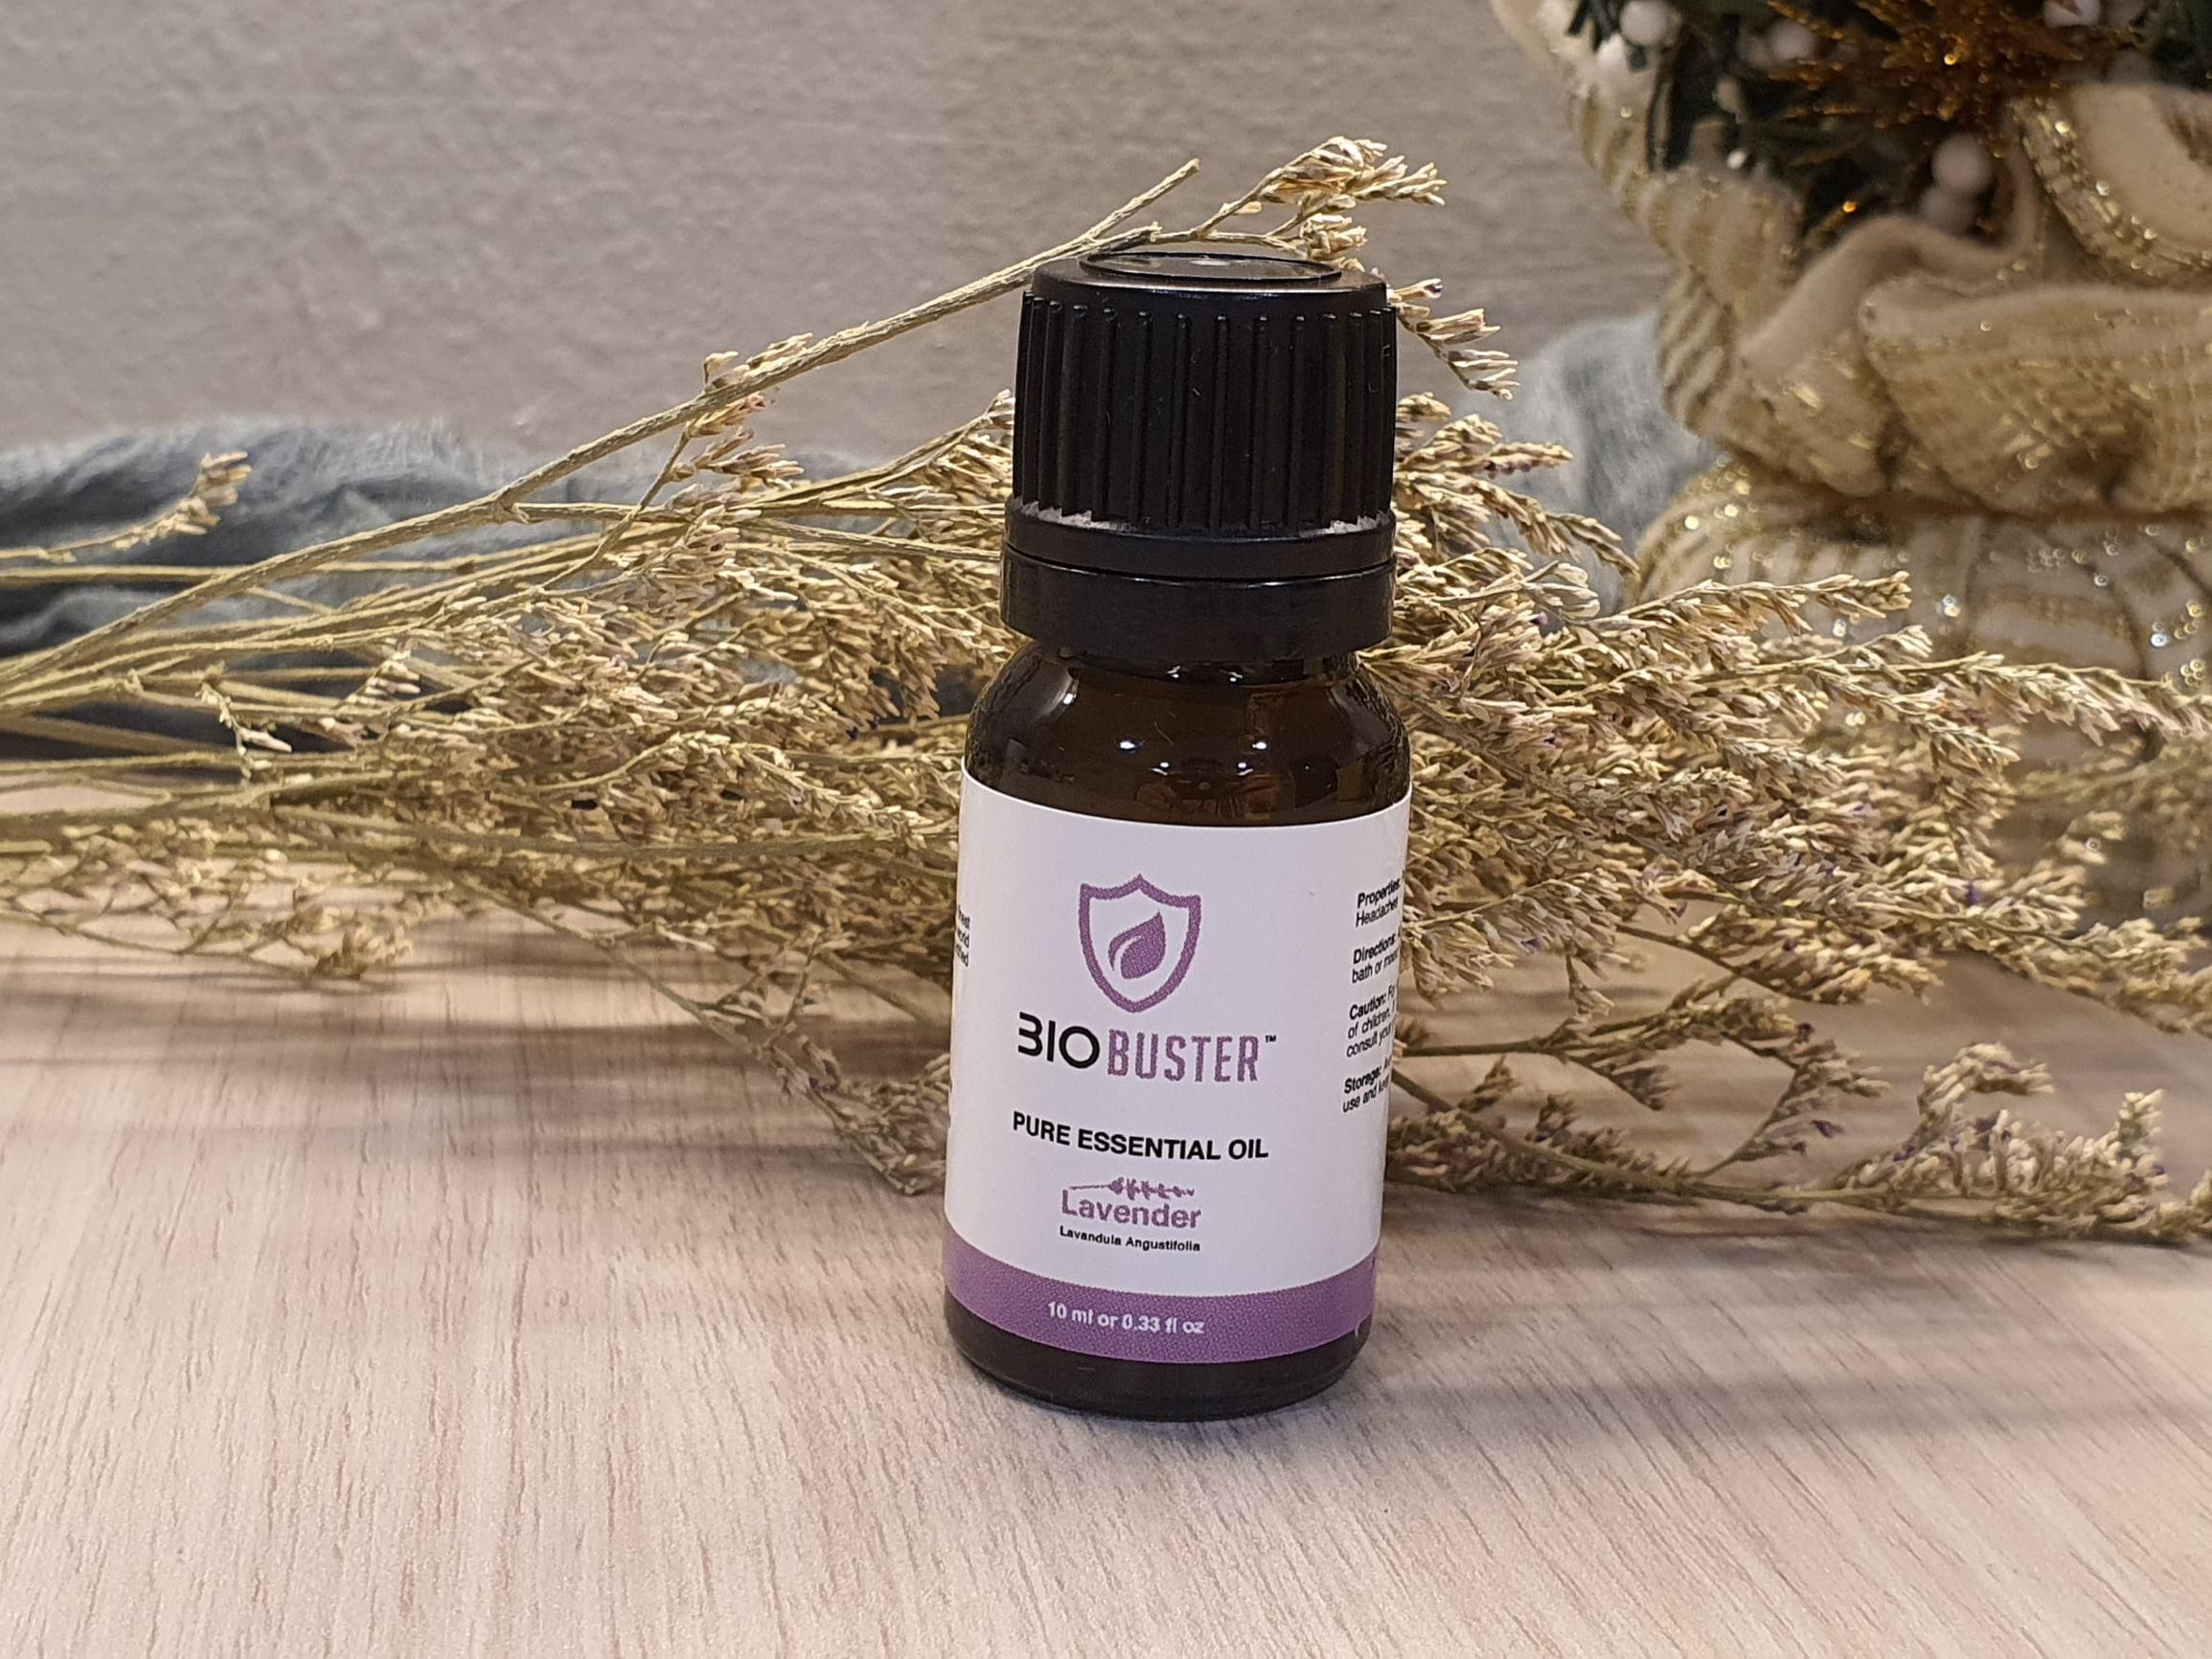 Biobuster Lavender Essential Oil